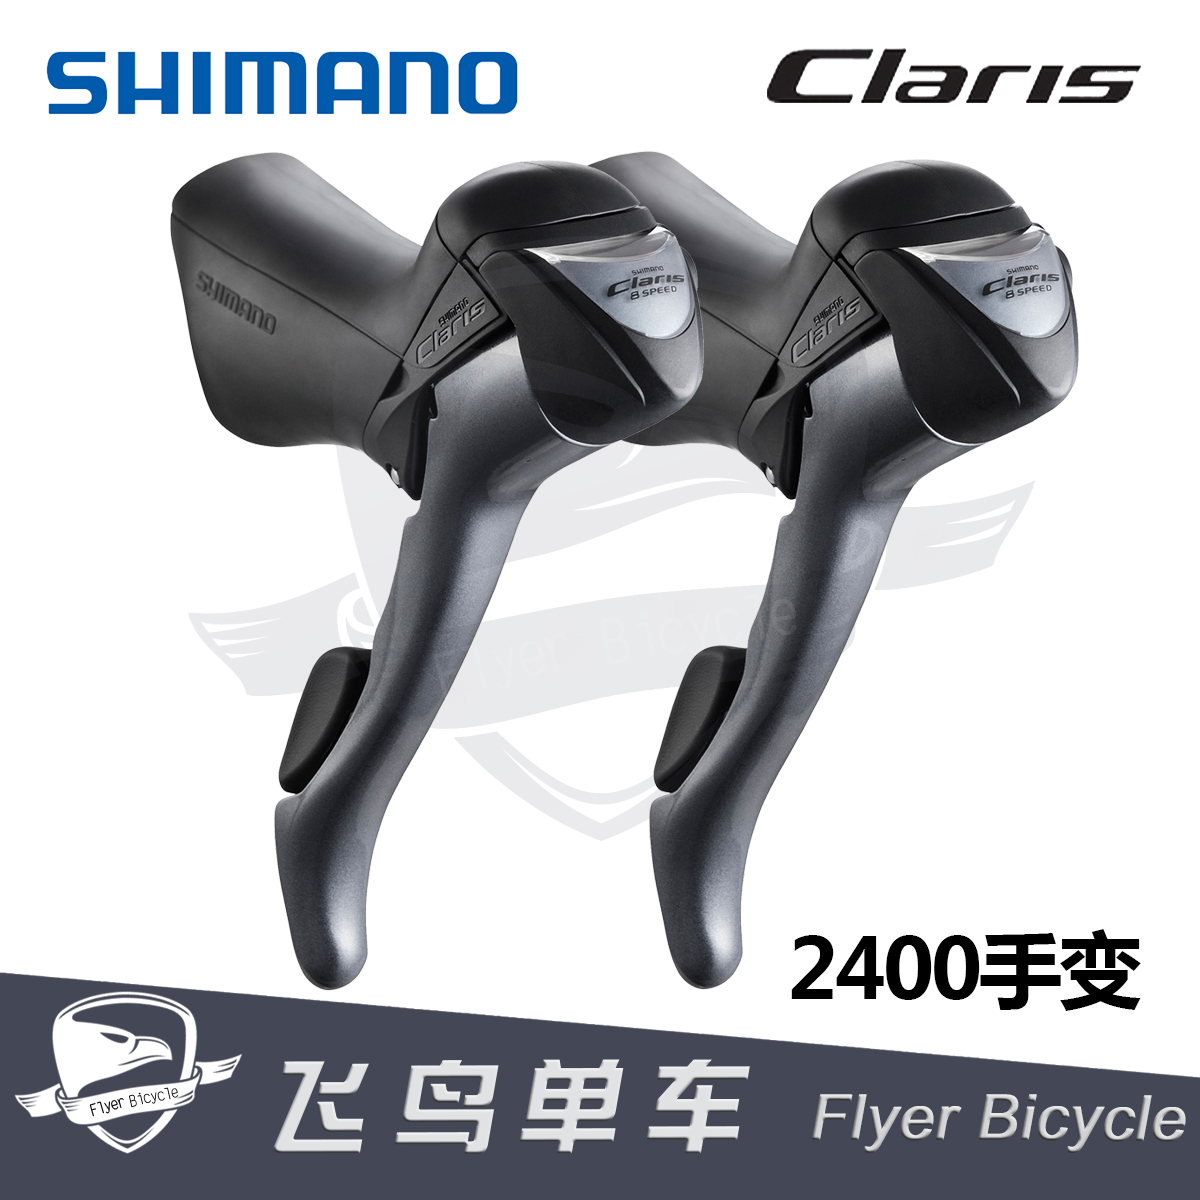 16 speed shimano claris